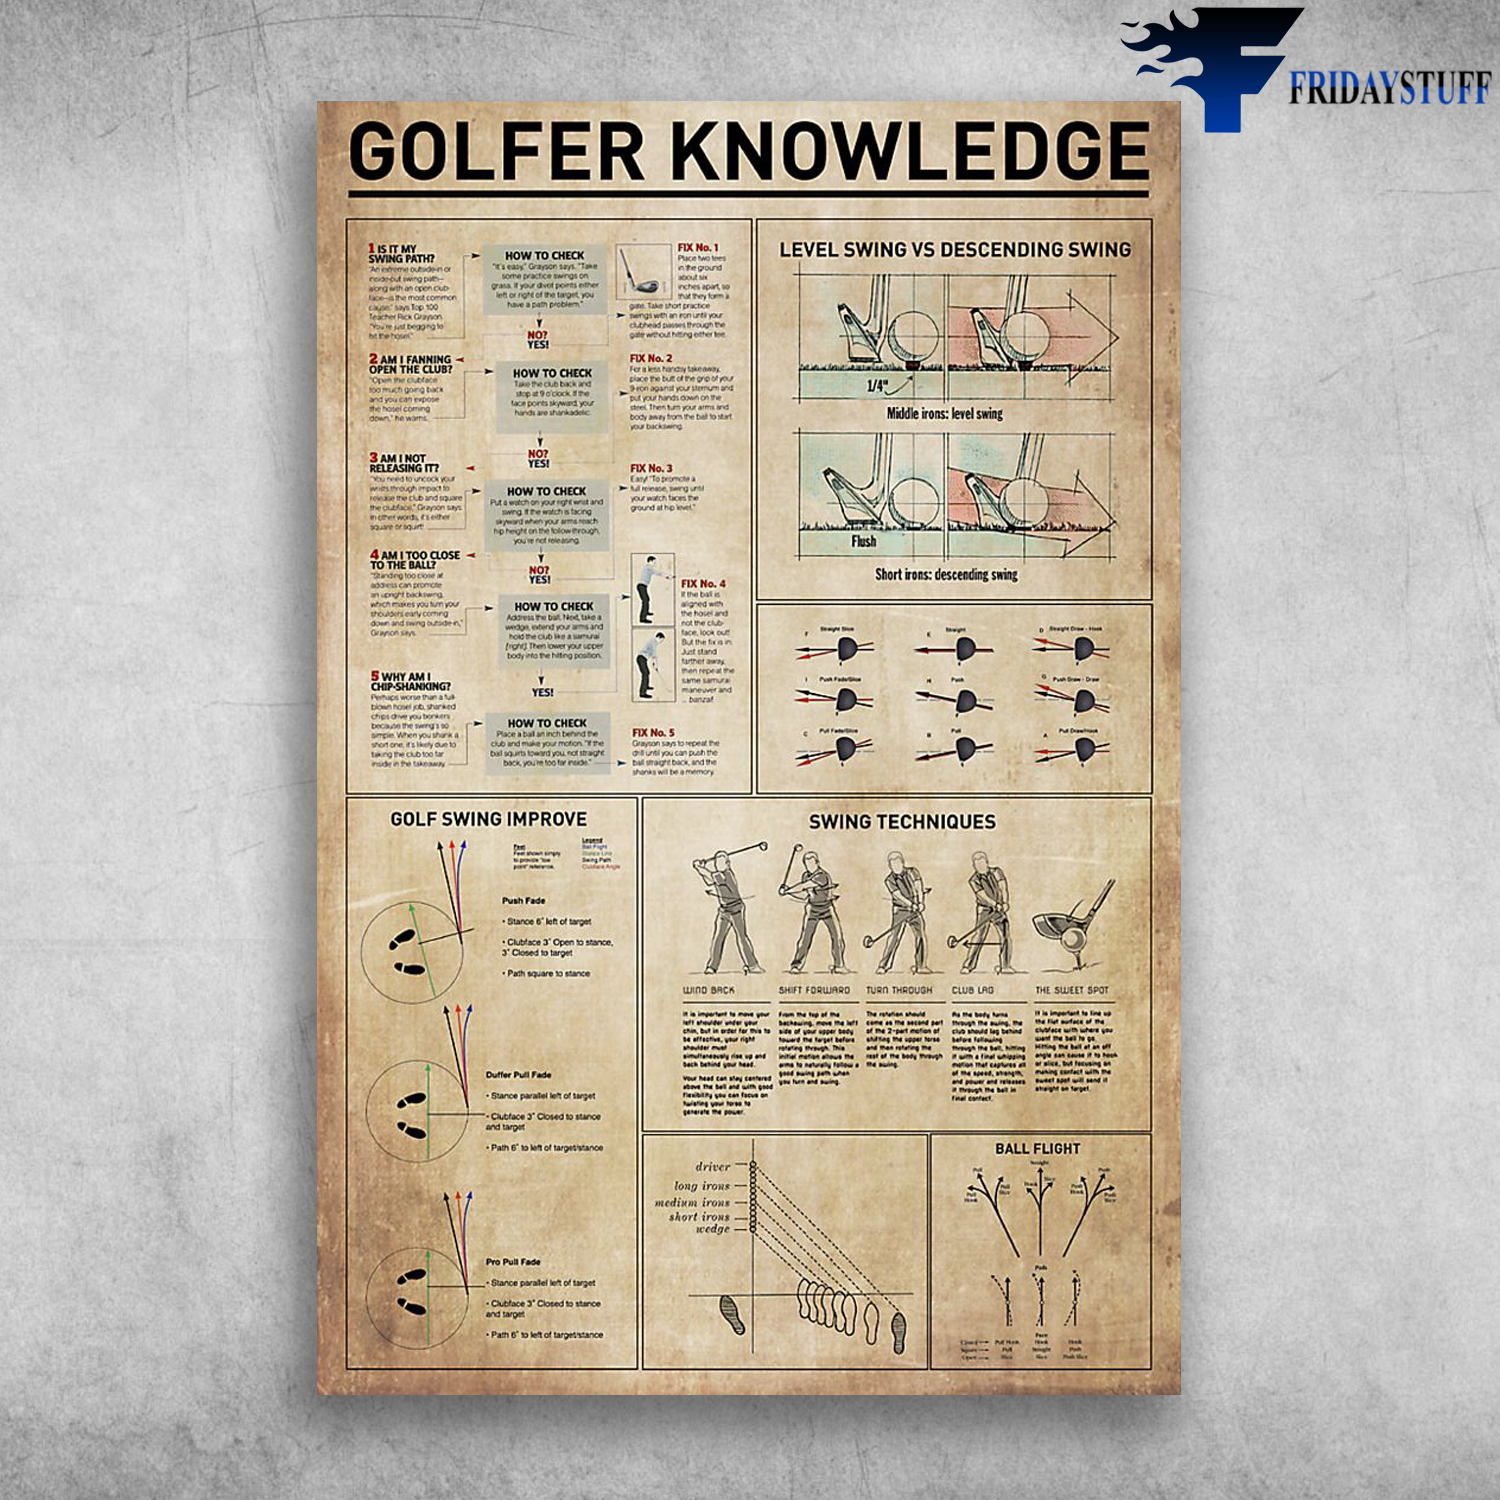 Golfer Knowledge Level Swing Vs Descending Swing Golf Swing Improve